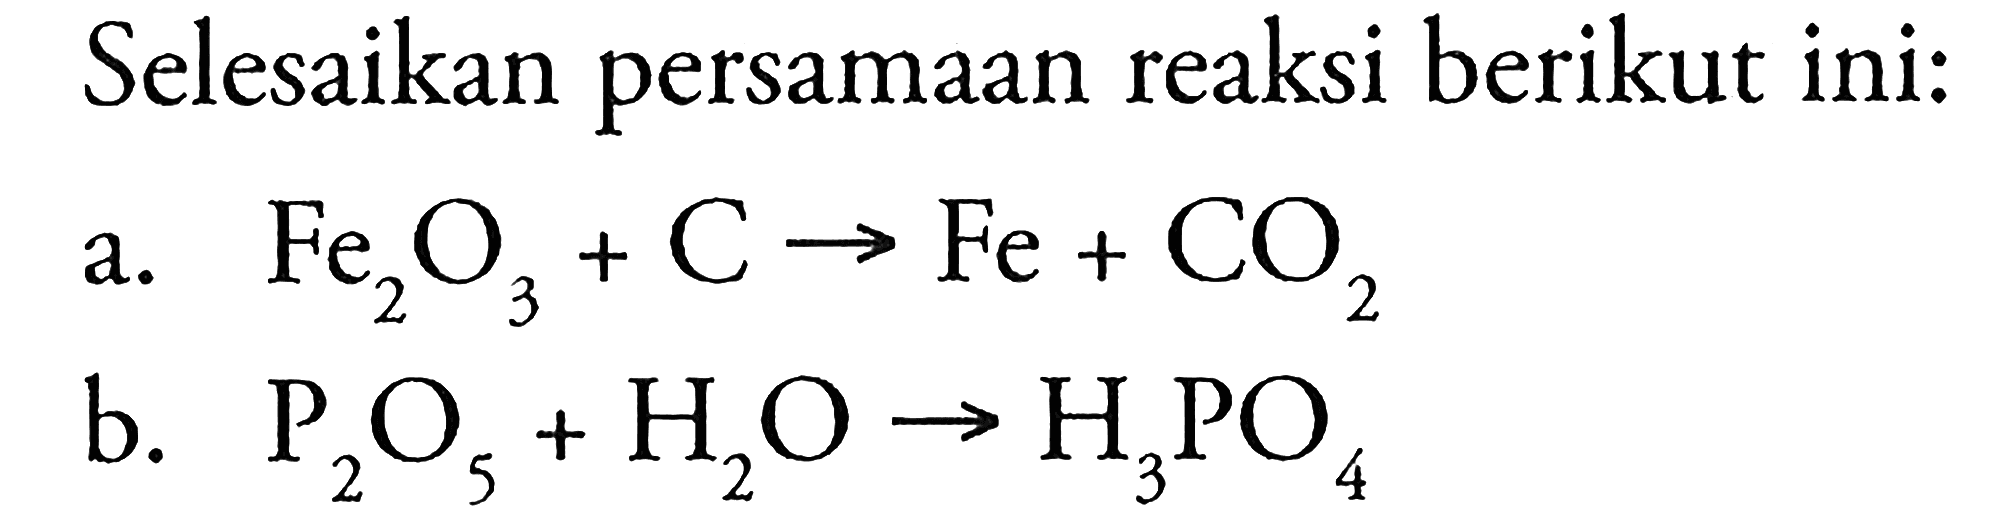 Selesaikan persamaan reaksi berikut ini:
a.  Fe2O3 + C -> Fe + CO2 
b.  P2O5 + H2O -> H3PO4 